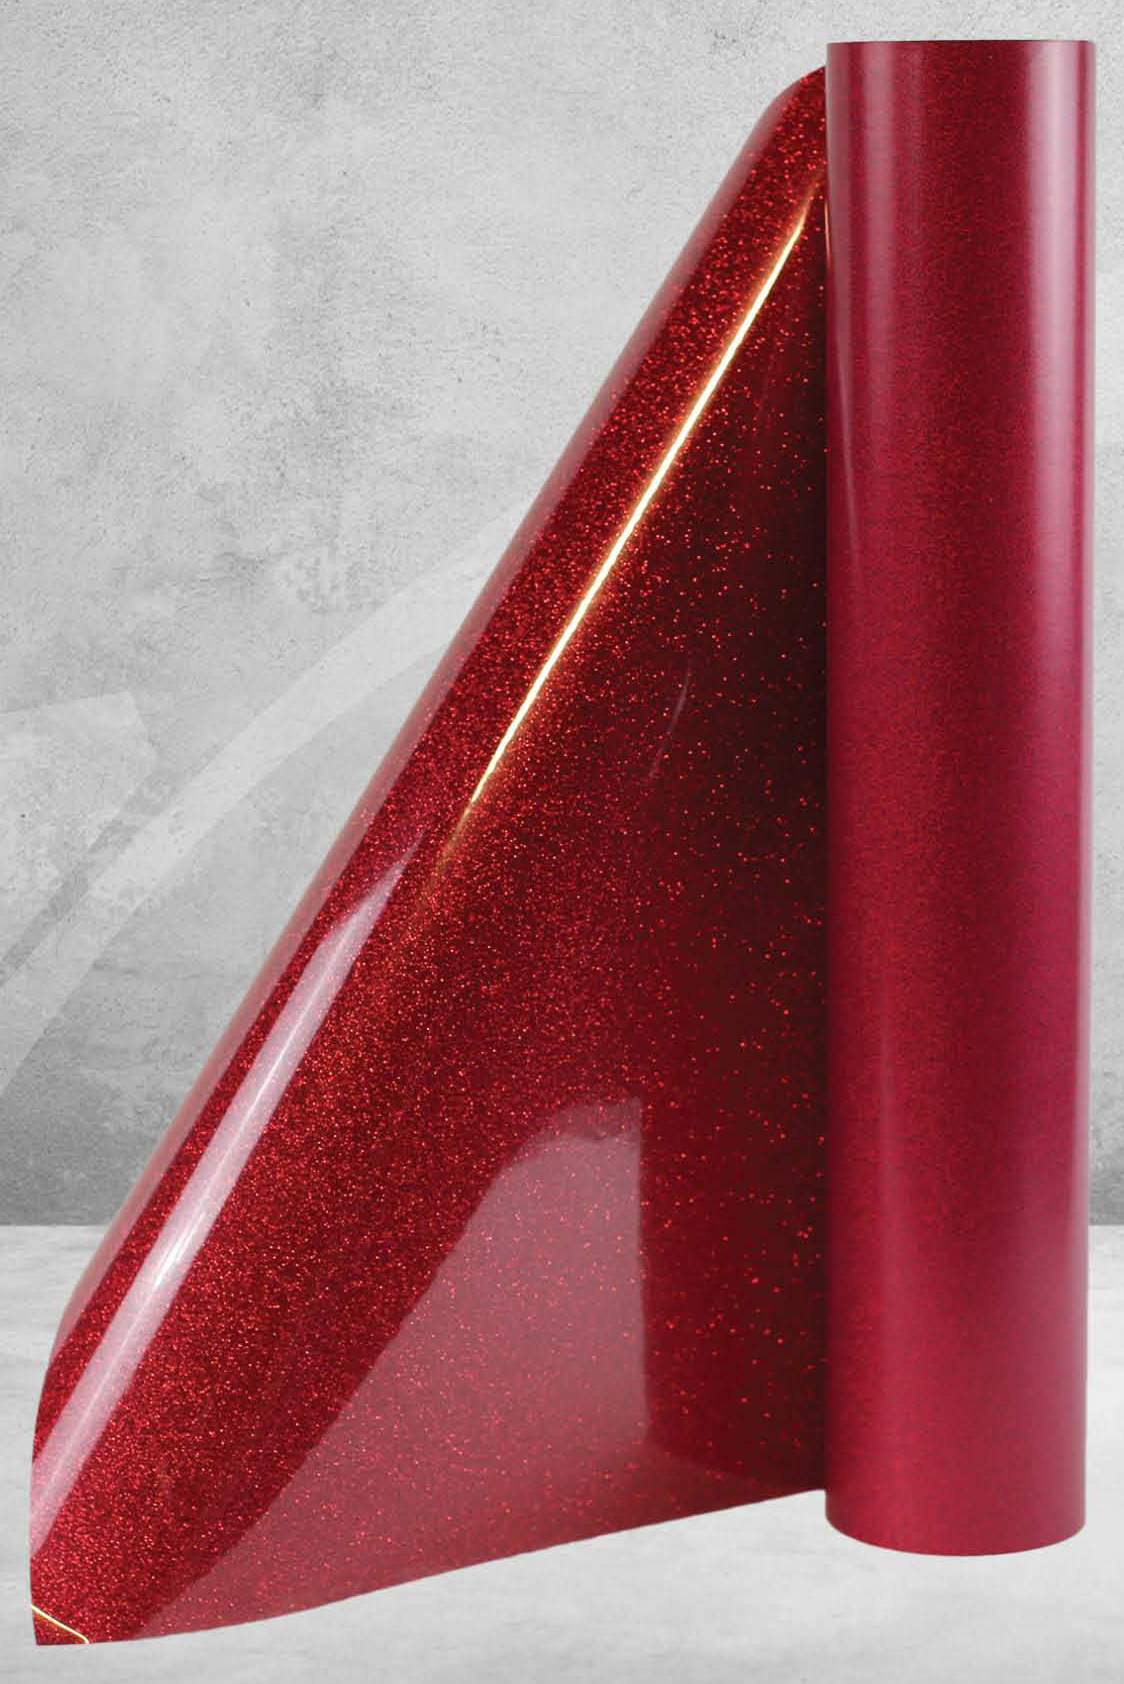 GlitterFlexULTRA Red - Specialty Materials GlitterFlex Ultra Heat Transfer Film